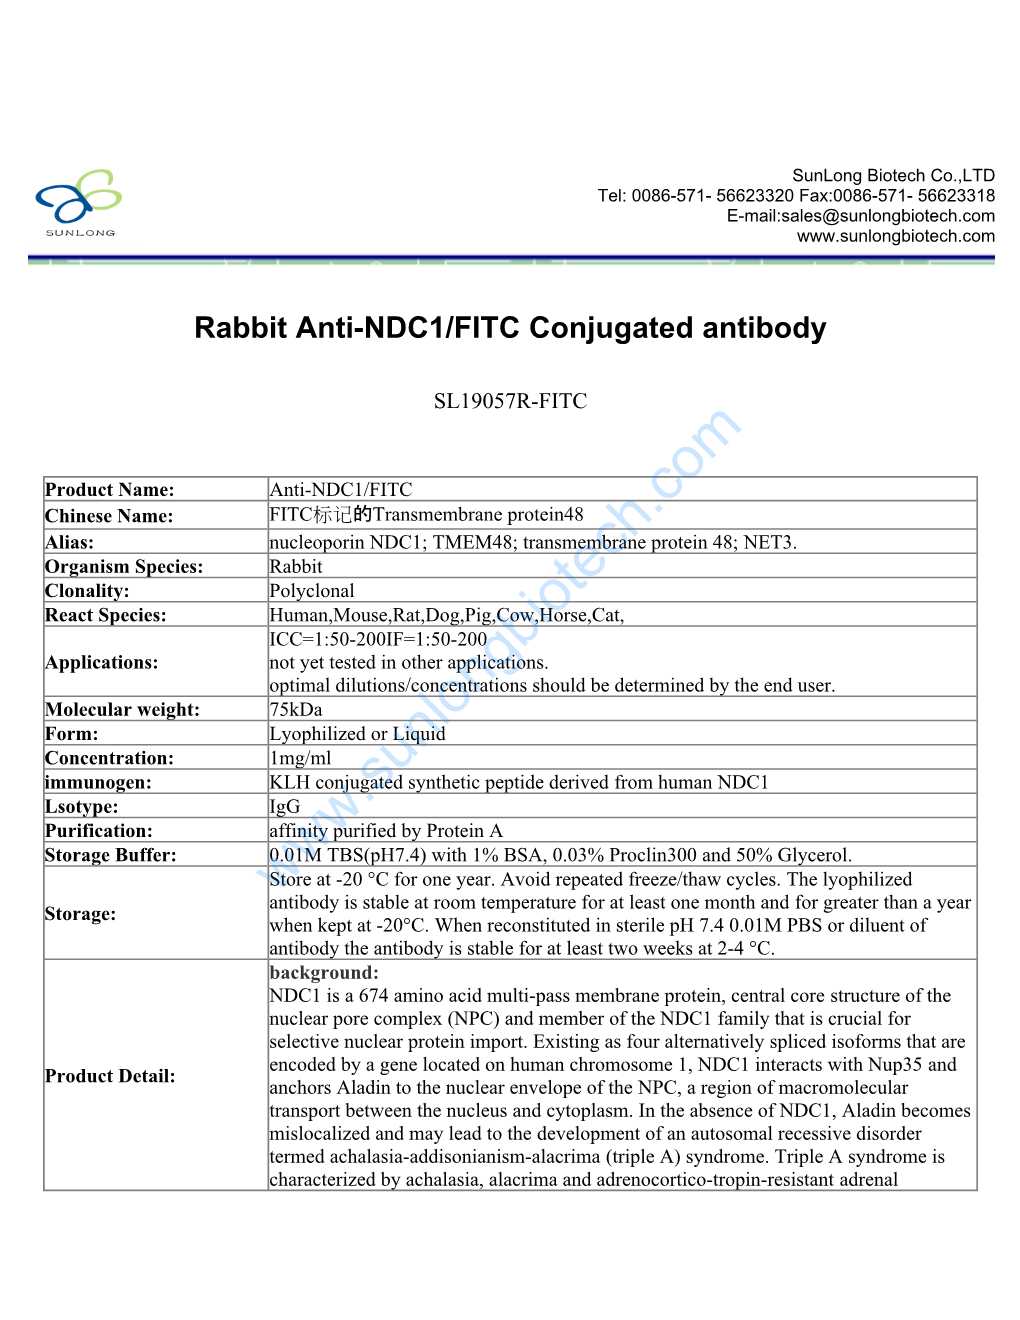 Rabbit Anti-NDC1/FITC Conjugated Antibody-SL19057R-FITC